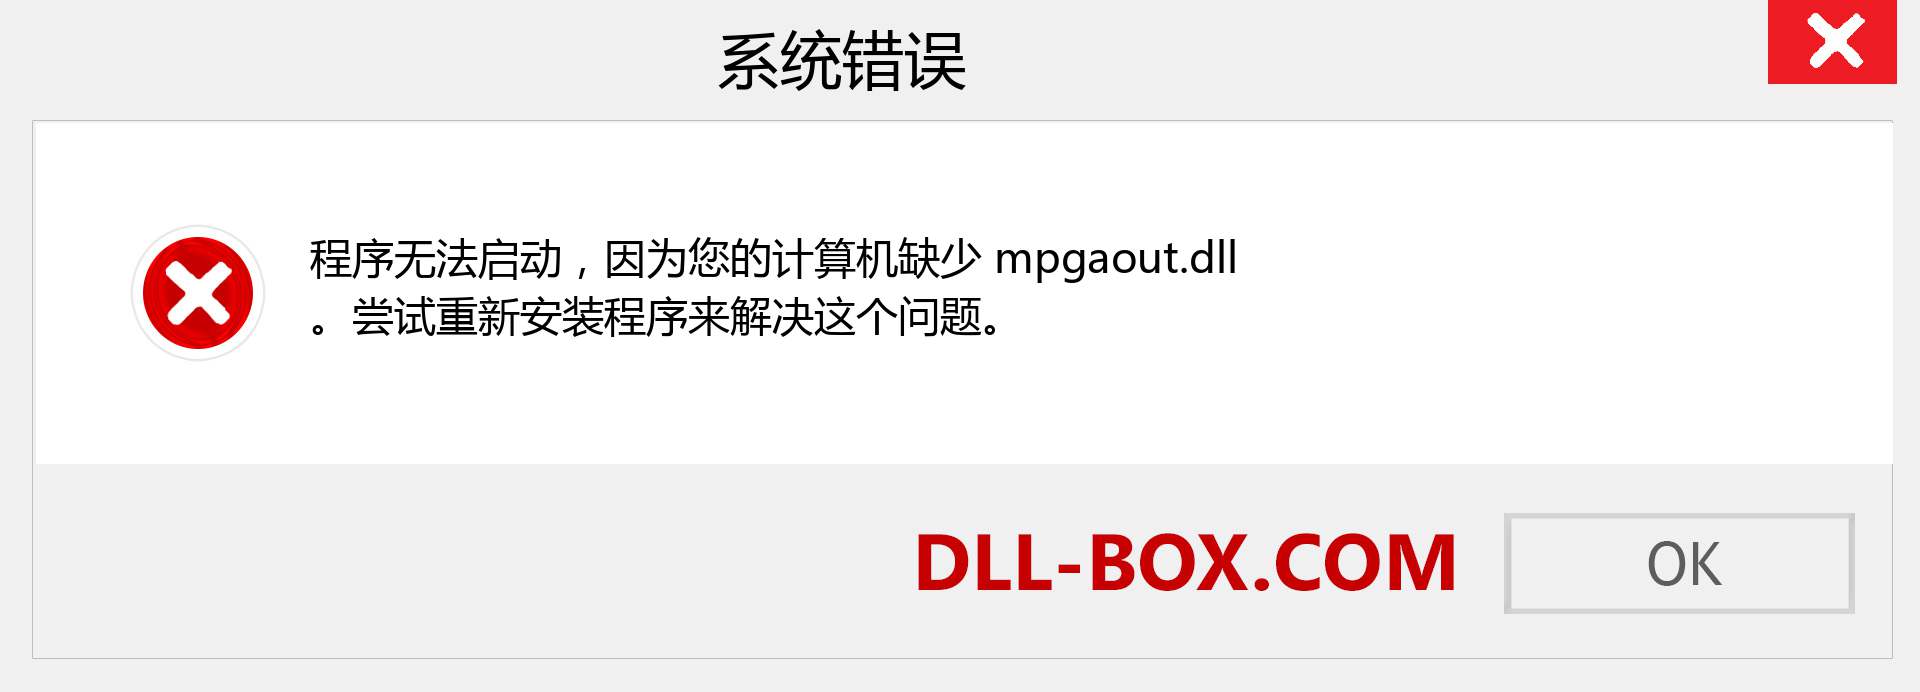 mpgaout.dll 文件丢失？。 适用于 Windows 7、8、10 的下载 - 修复 Windows、照片、图像上的 mpgaout dll 丢失错误